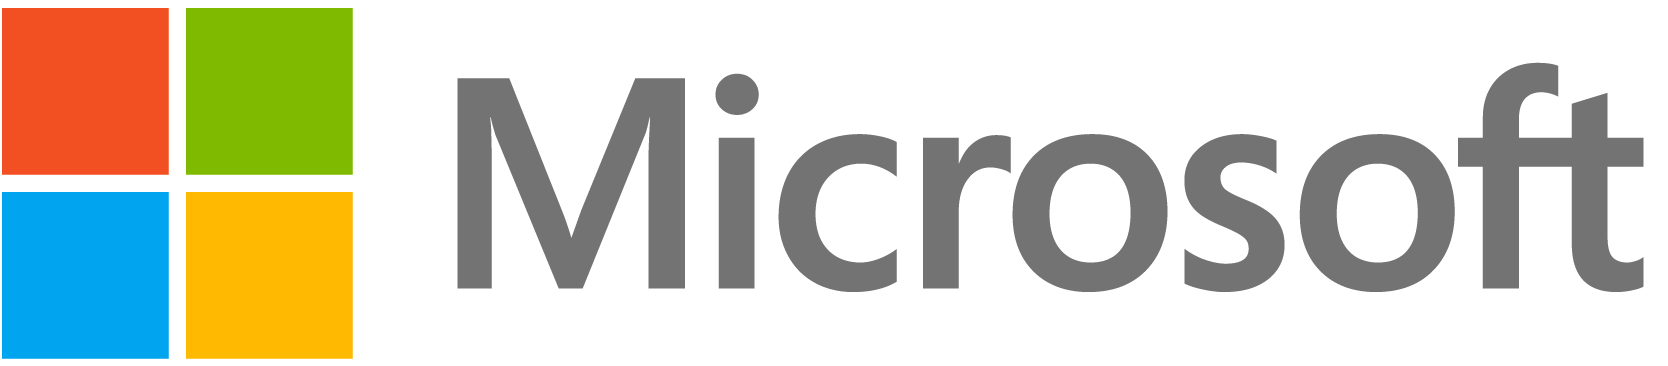 microsoft-logo-png-transparent-20-1